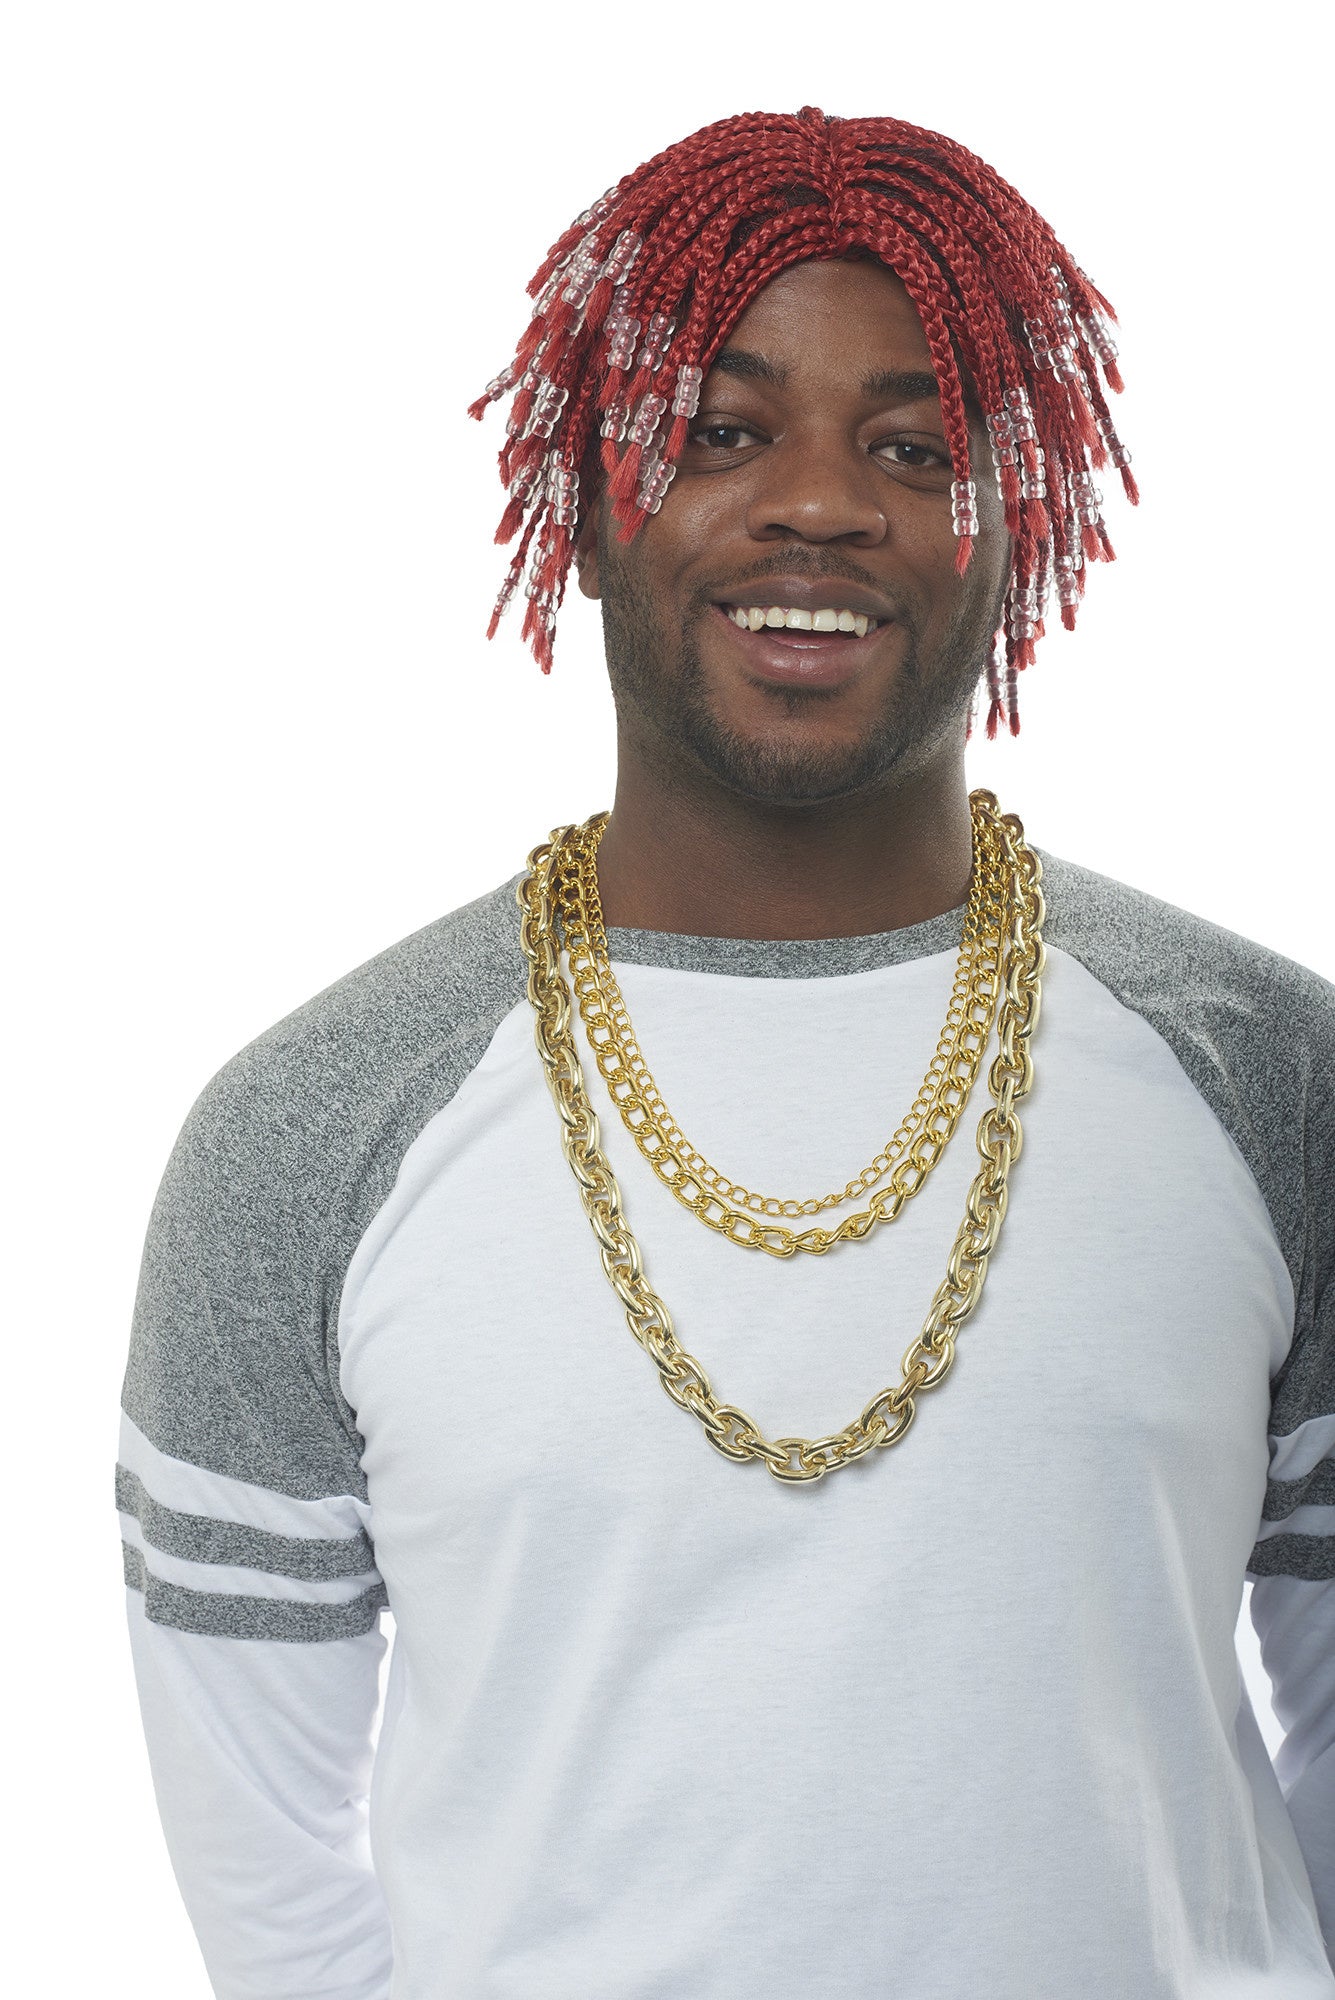 Rapper Wig - Red